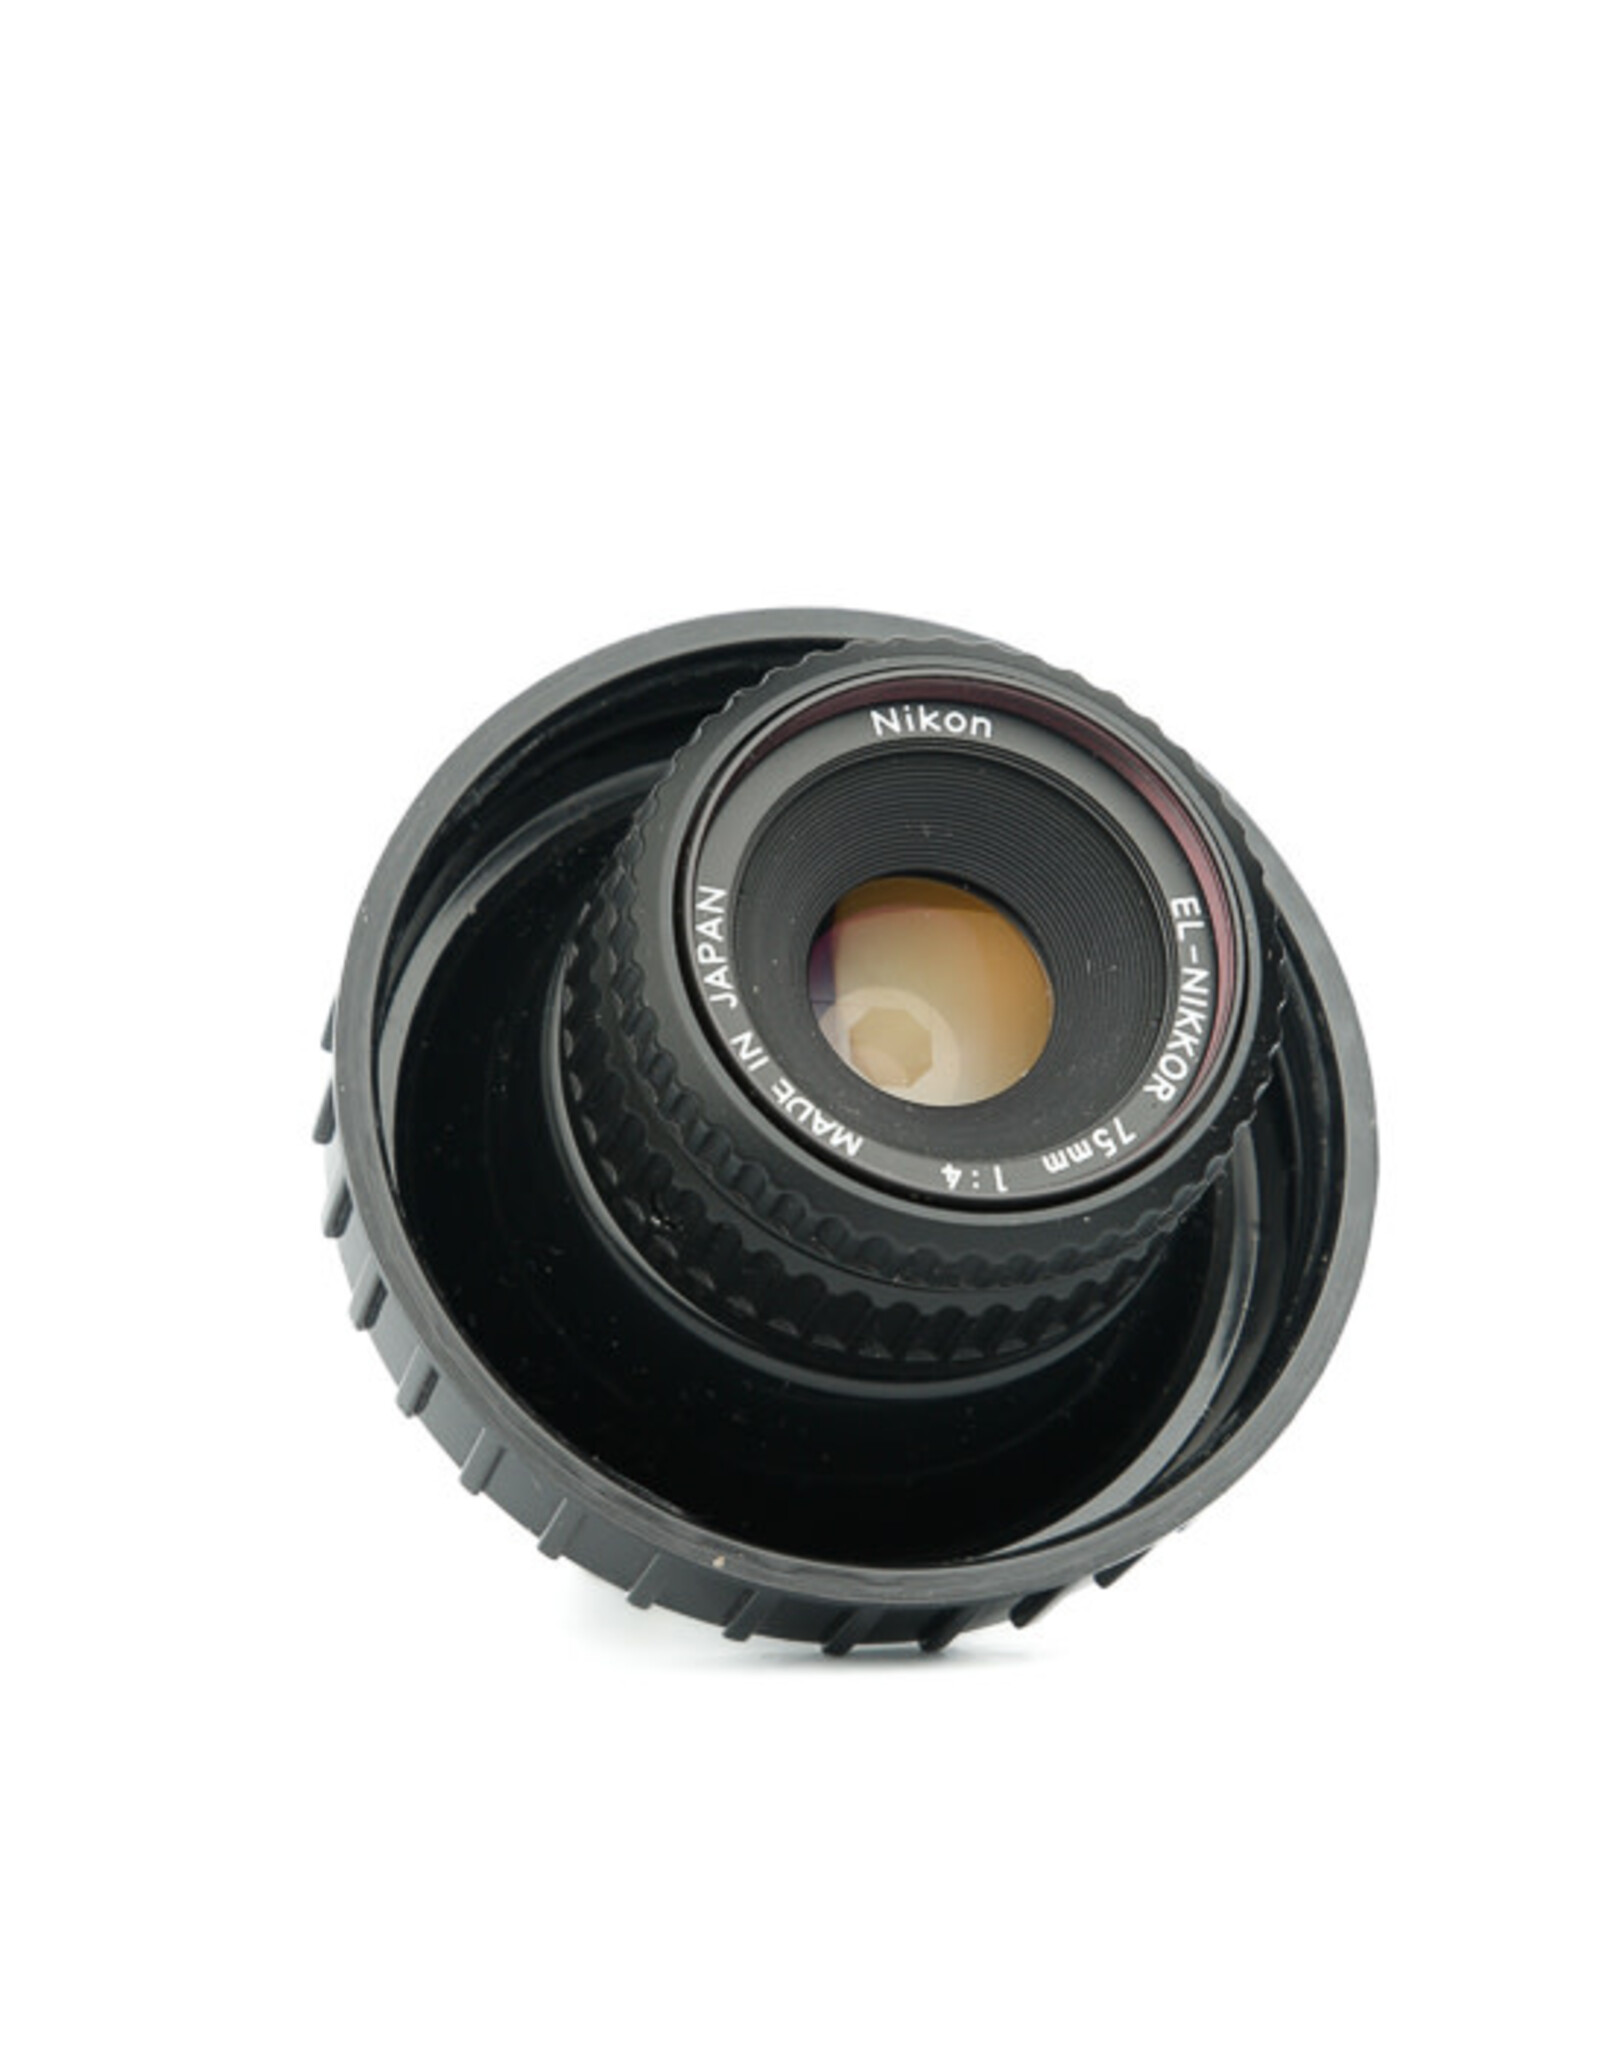 Nikon Nikon EL-Nikkor 75mm f4 Enlarger Lens (new in box)